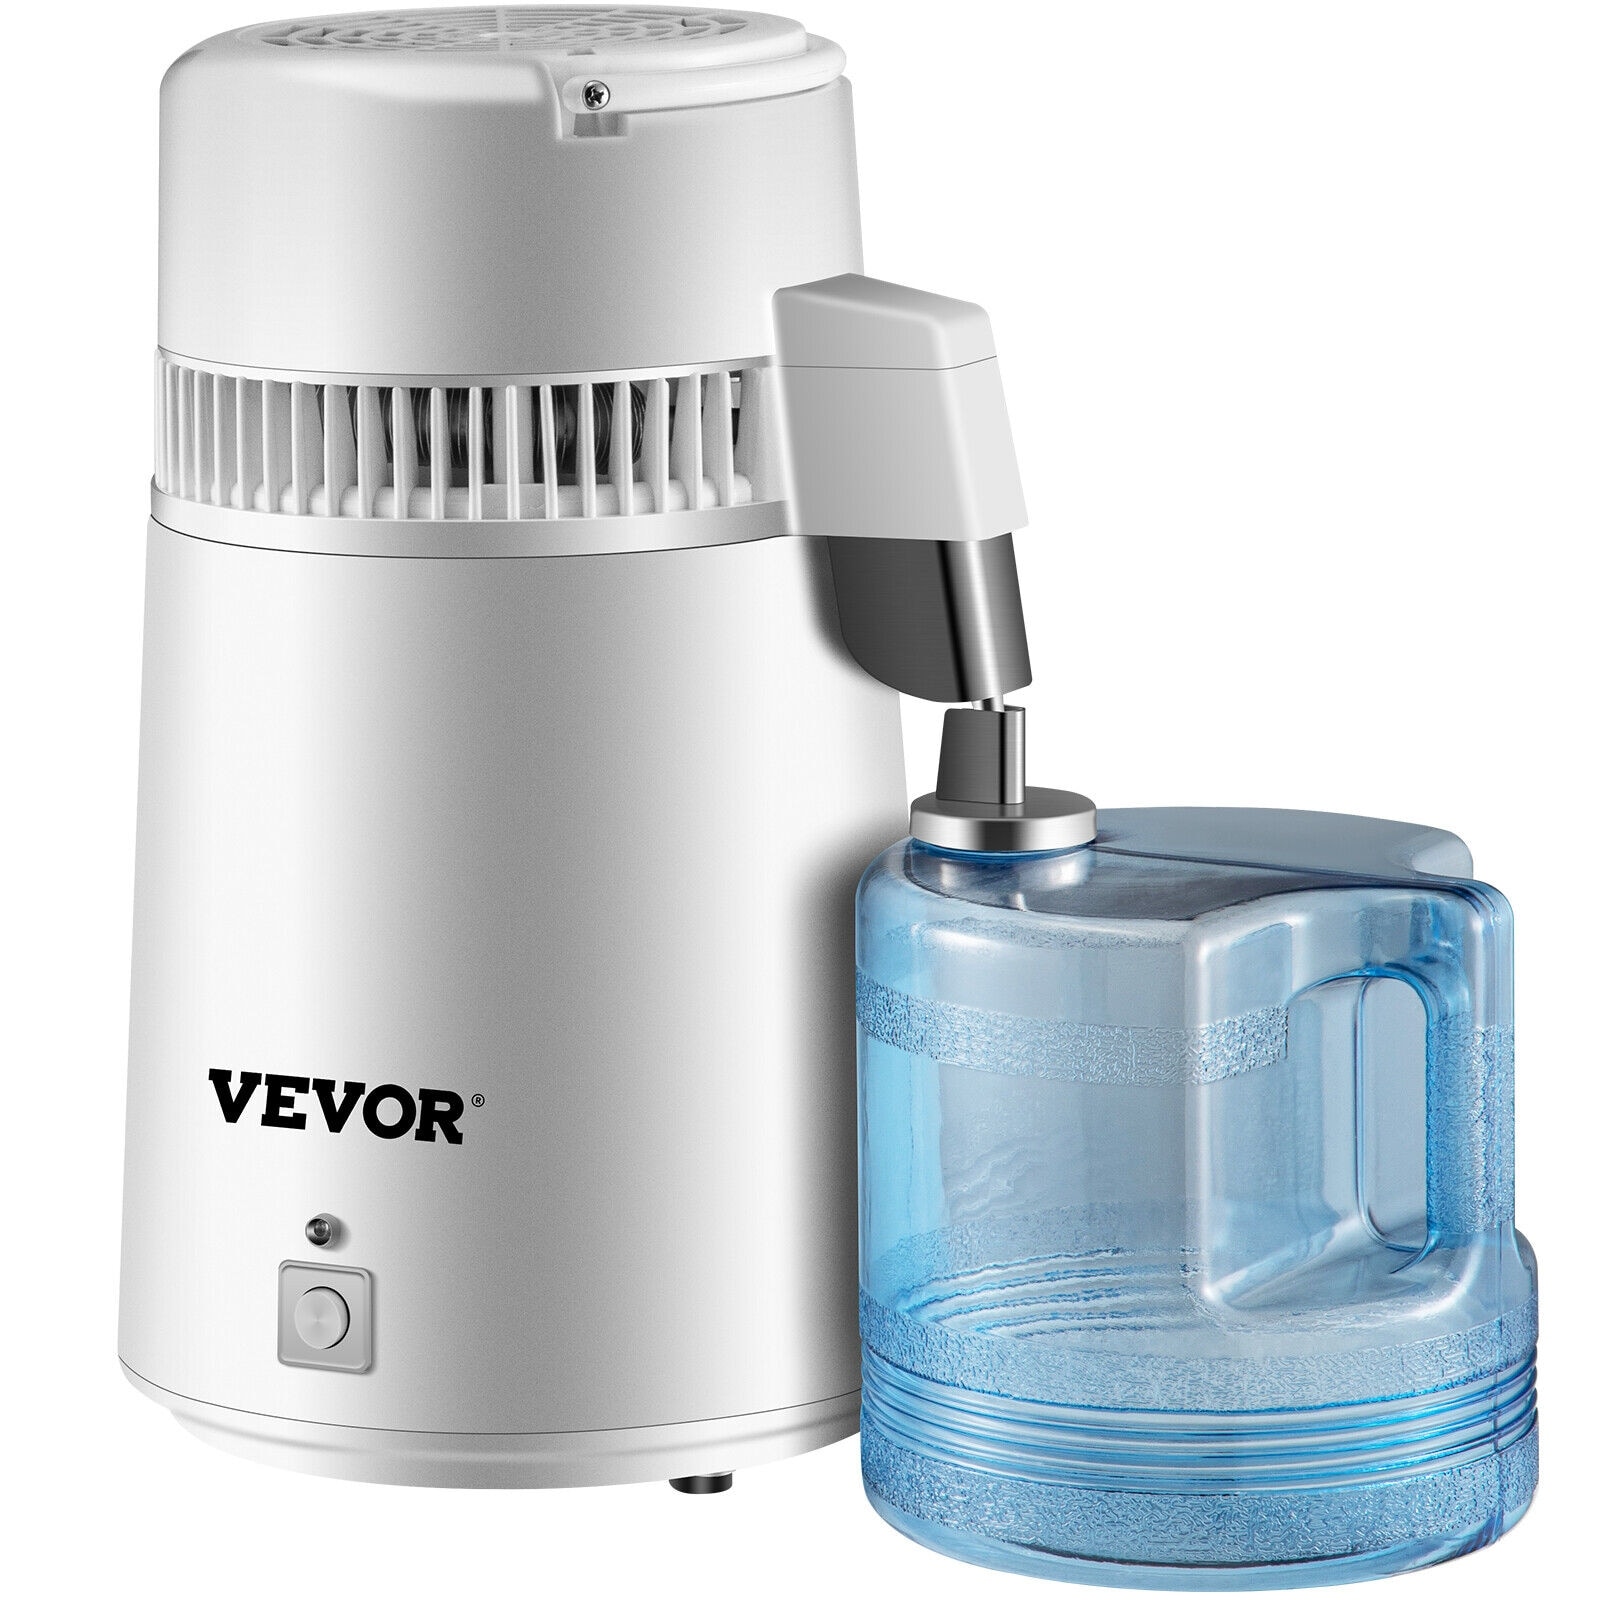 VEVOR Water Distiller 750 Watt Purifier Filter 1.1 gal. Fully Upgraded Distilling Pure Water Machine with Handle, White